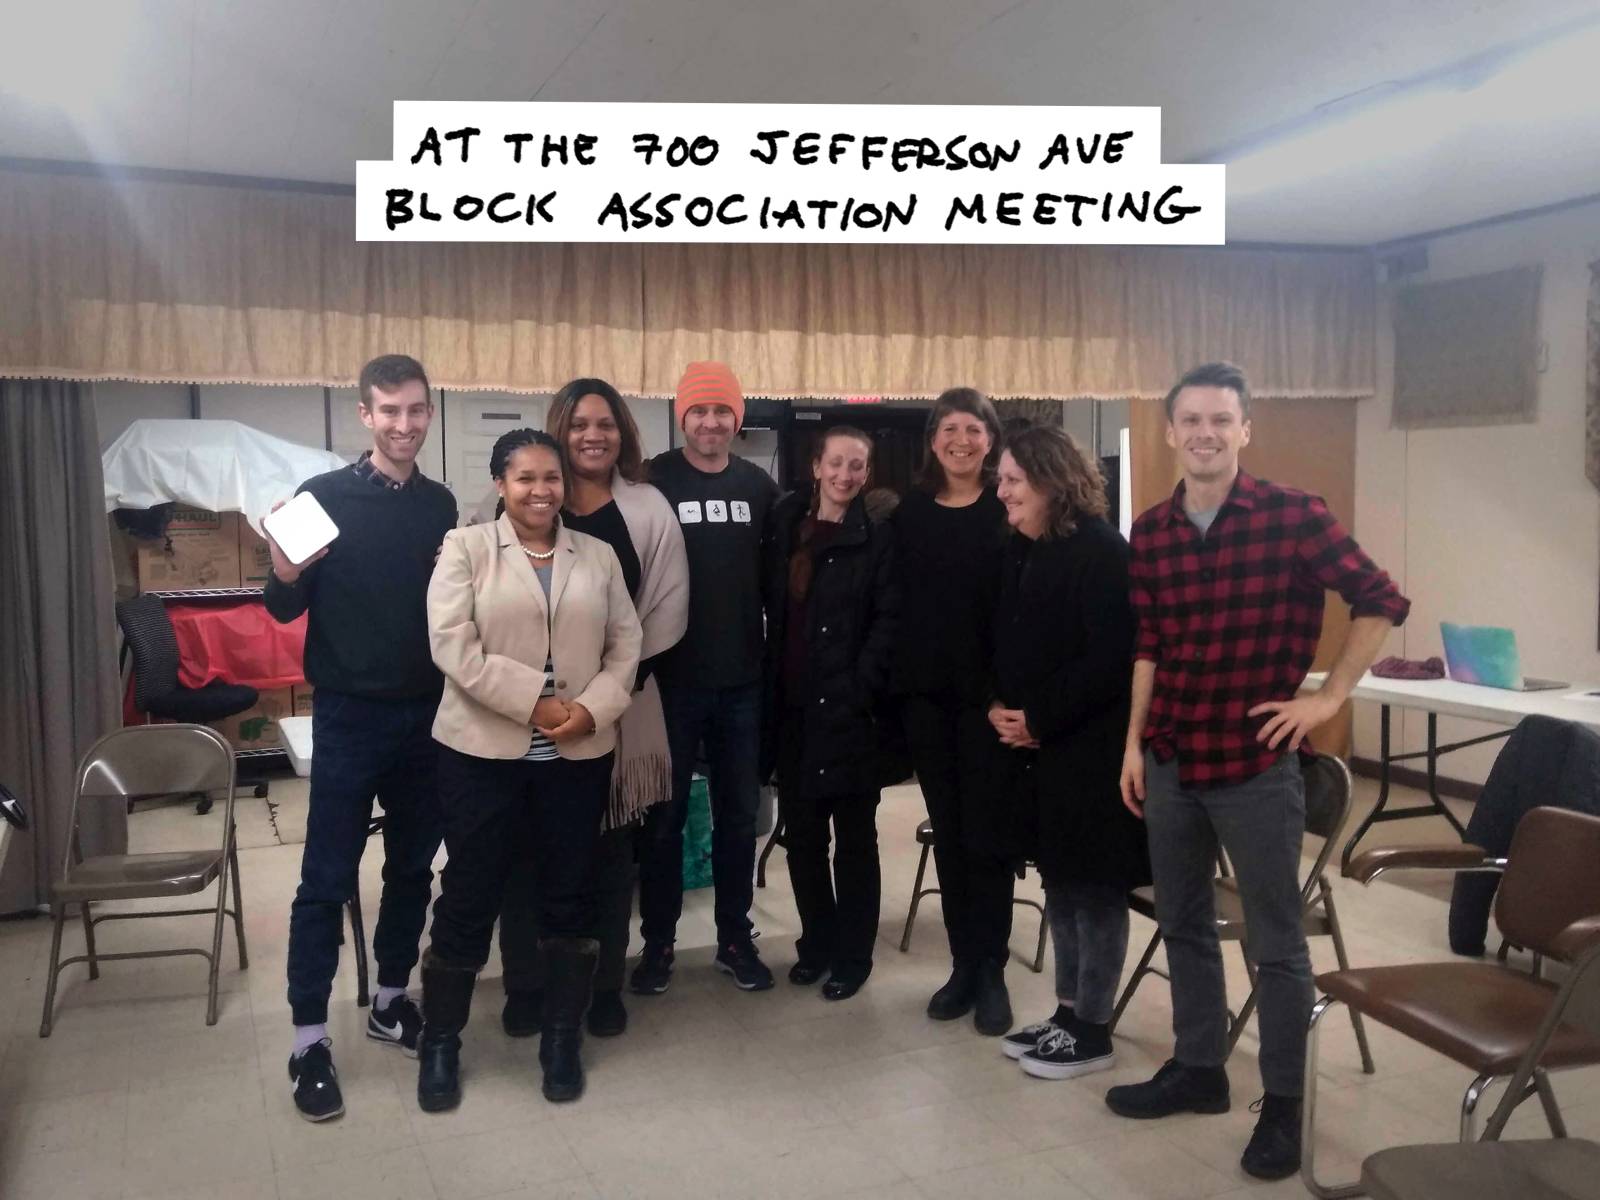 Block association meeting